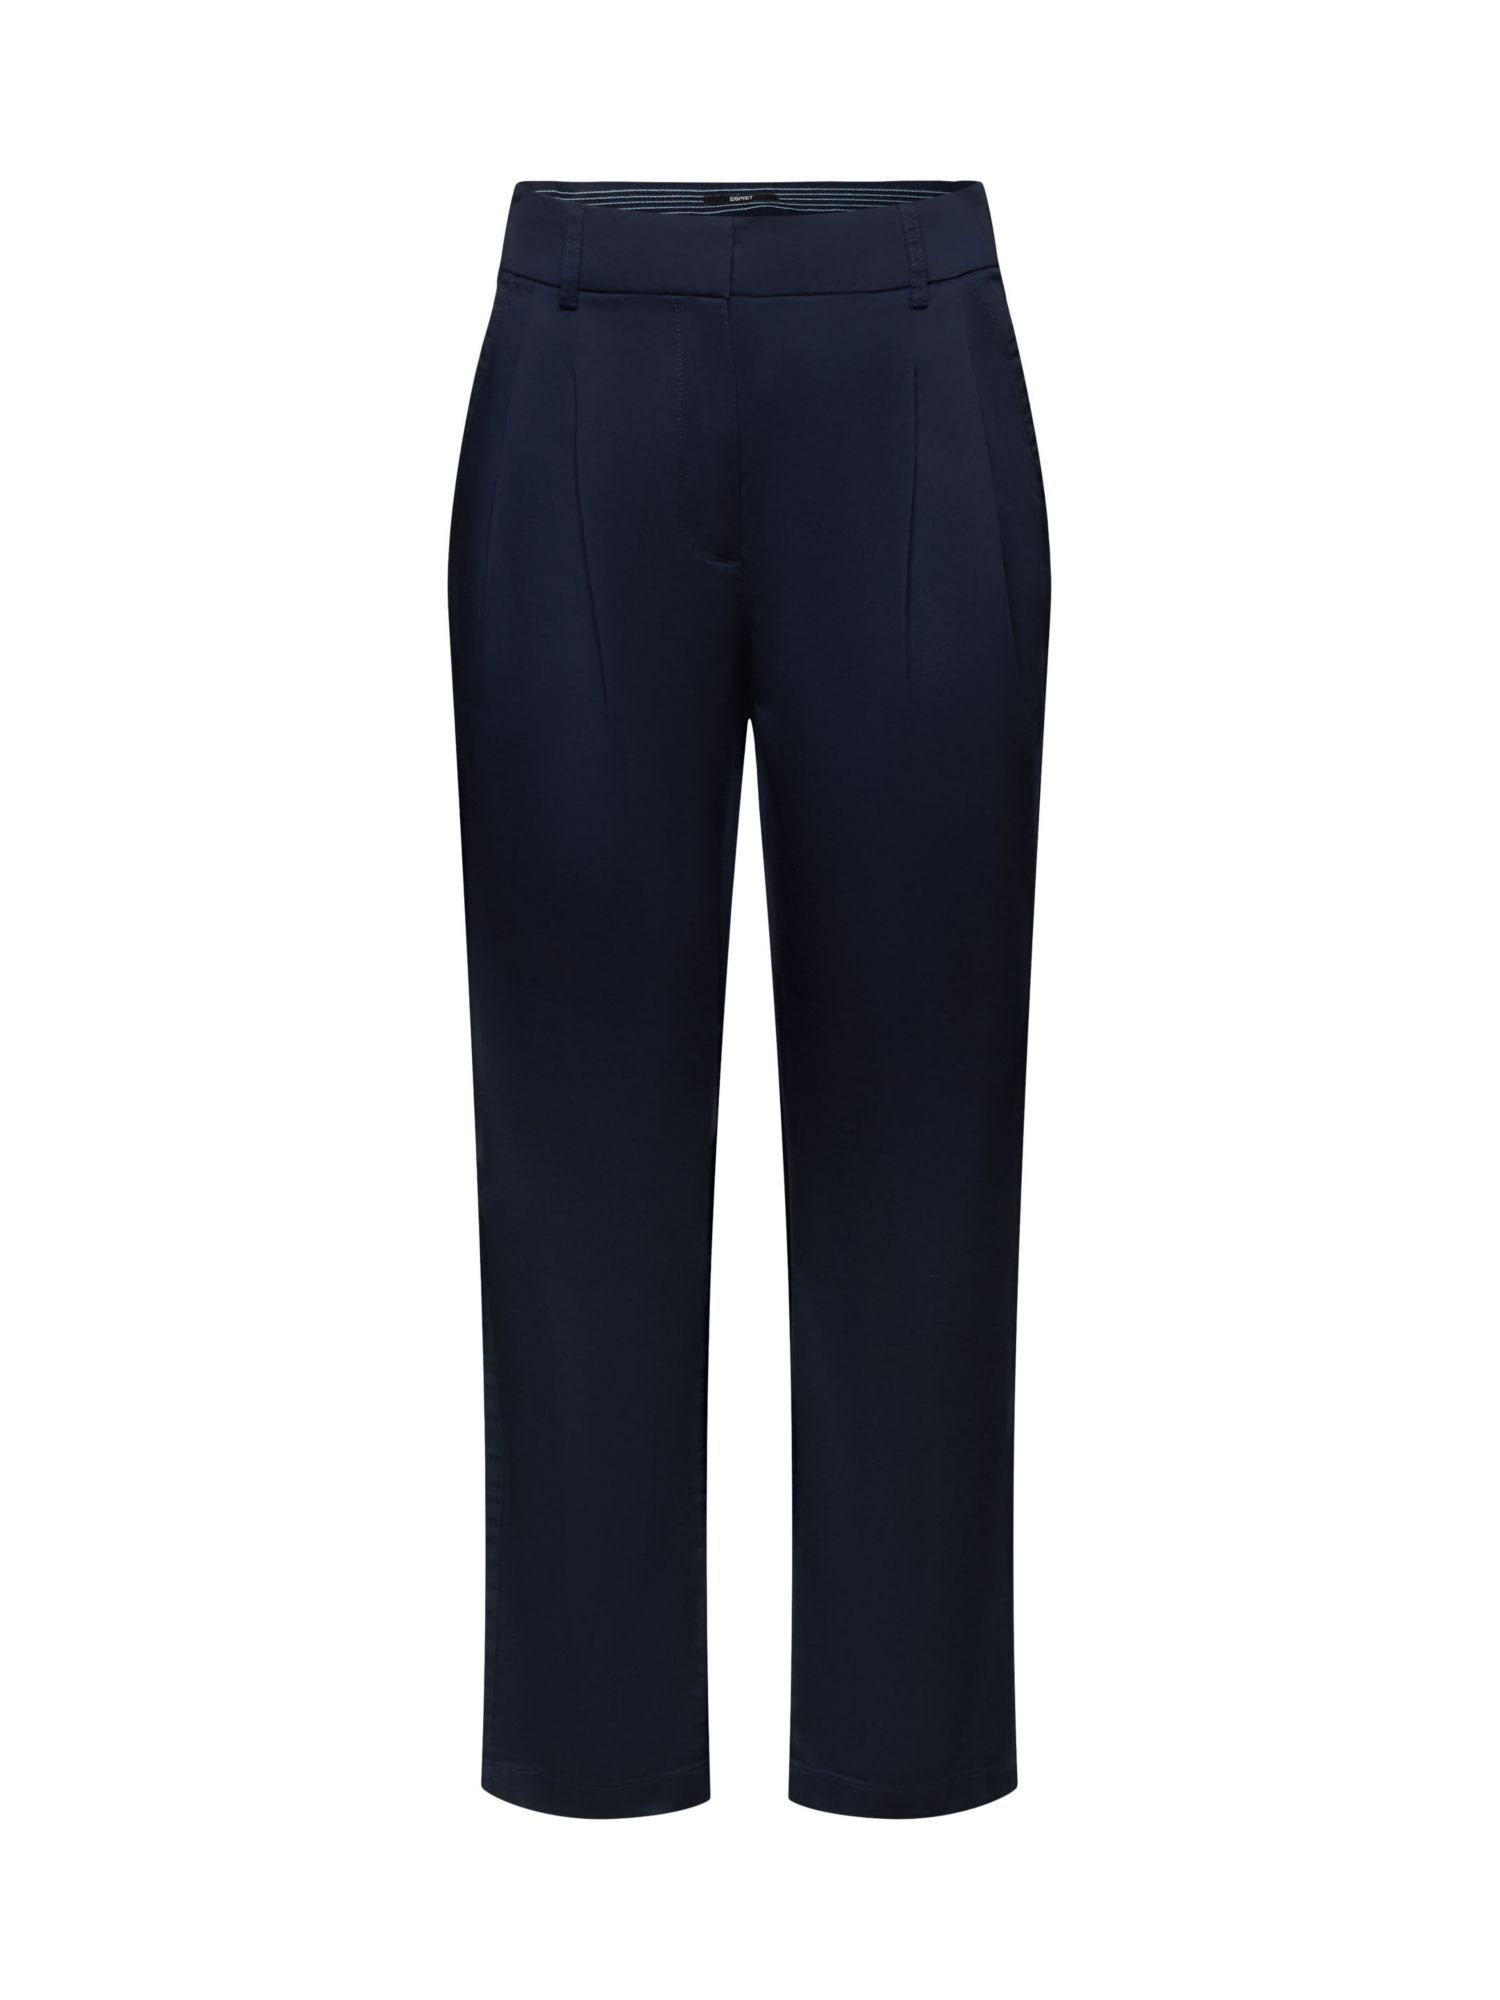 Esprit Collection 7/8-Hose Pants woven NAVY